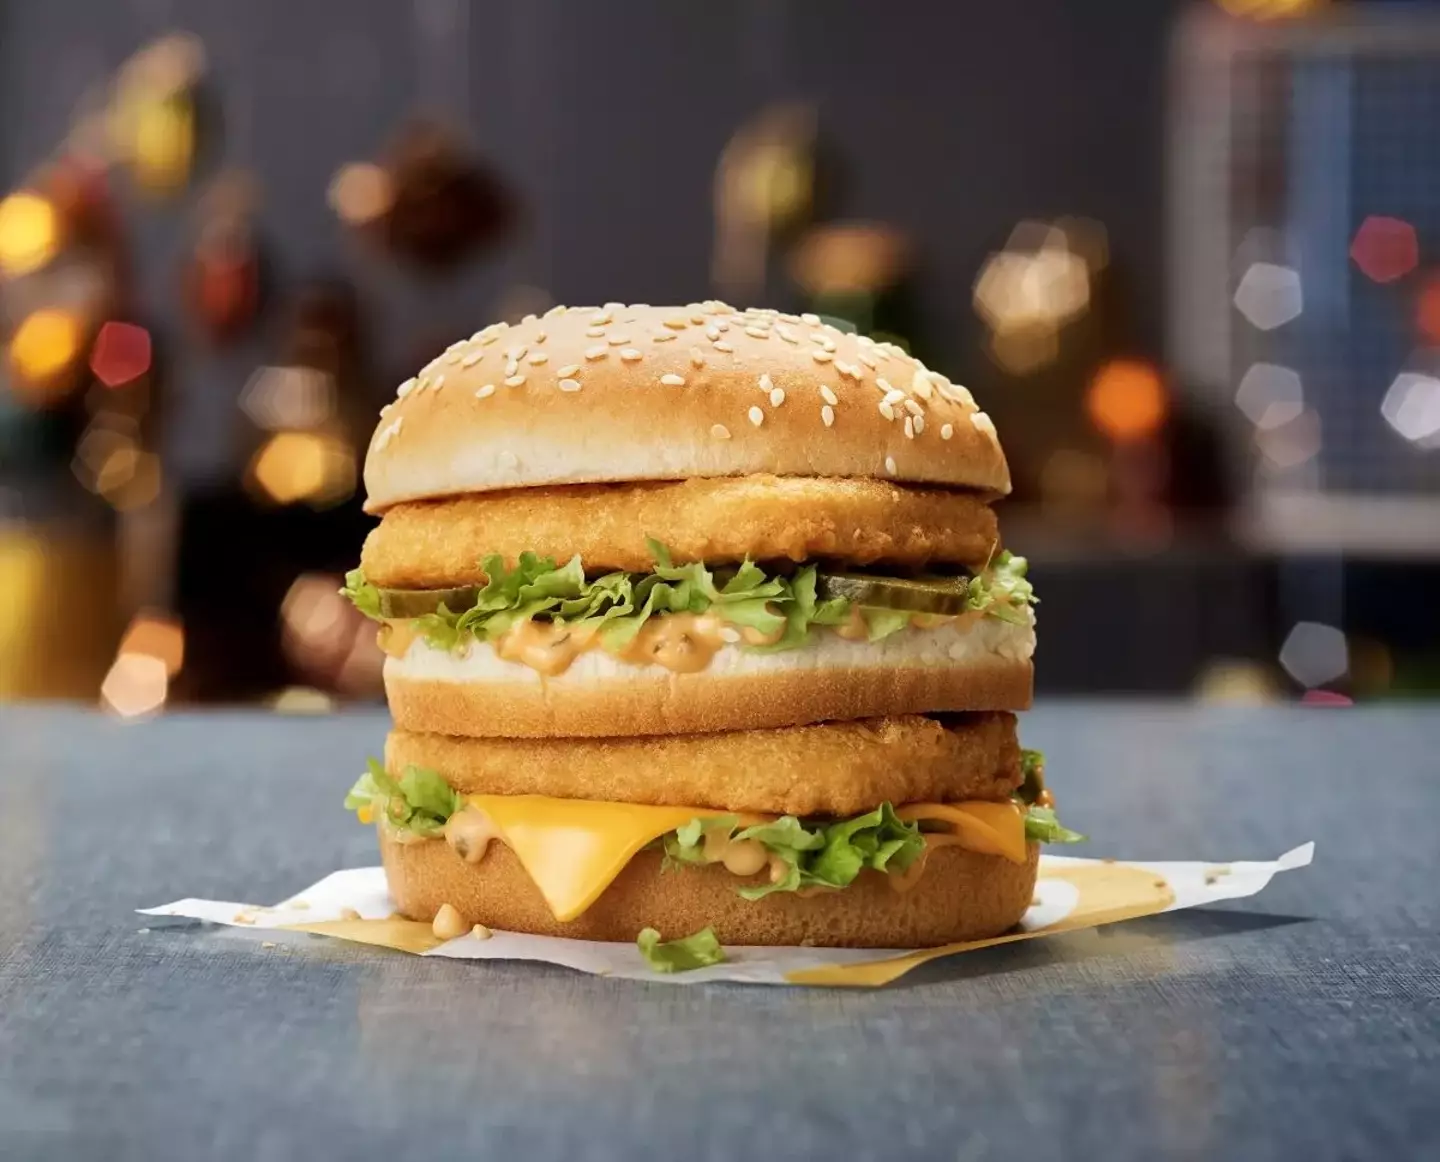 The Chicken Big Mac has made an epic comeback (McDonald's)